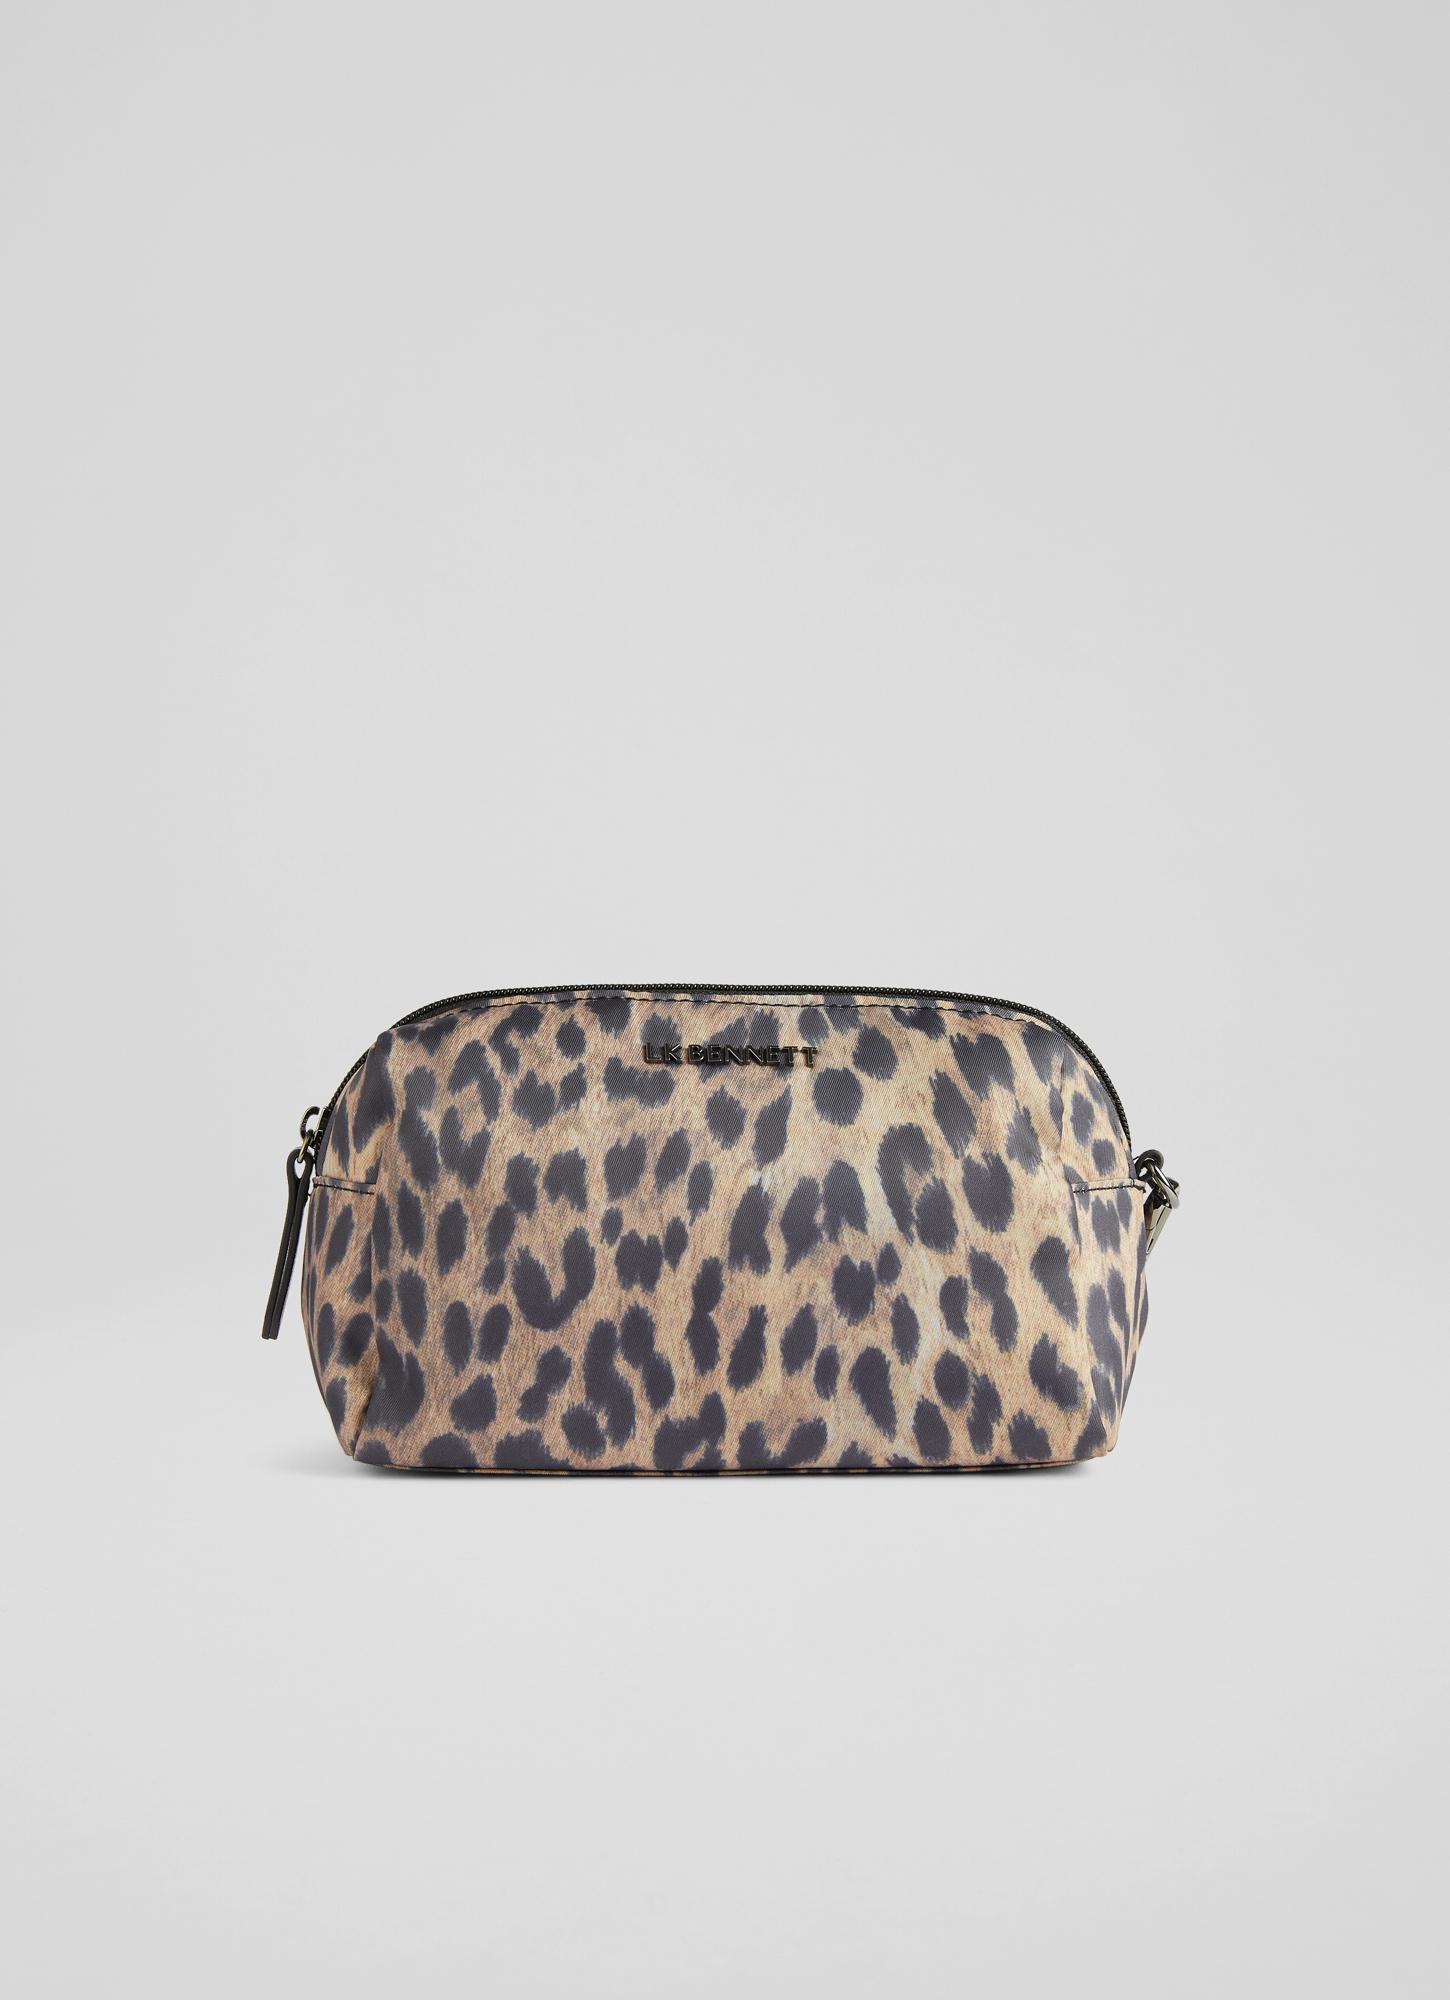 Leather Animal print purse/clutch – Boho Beach House